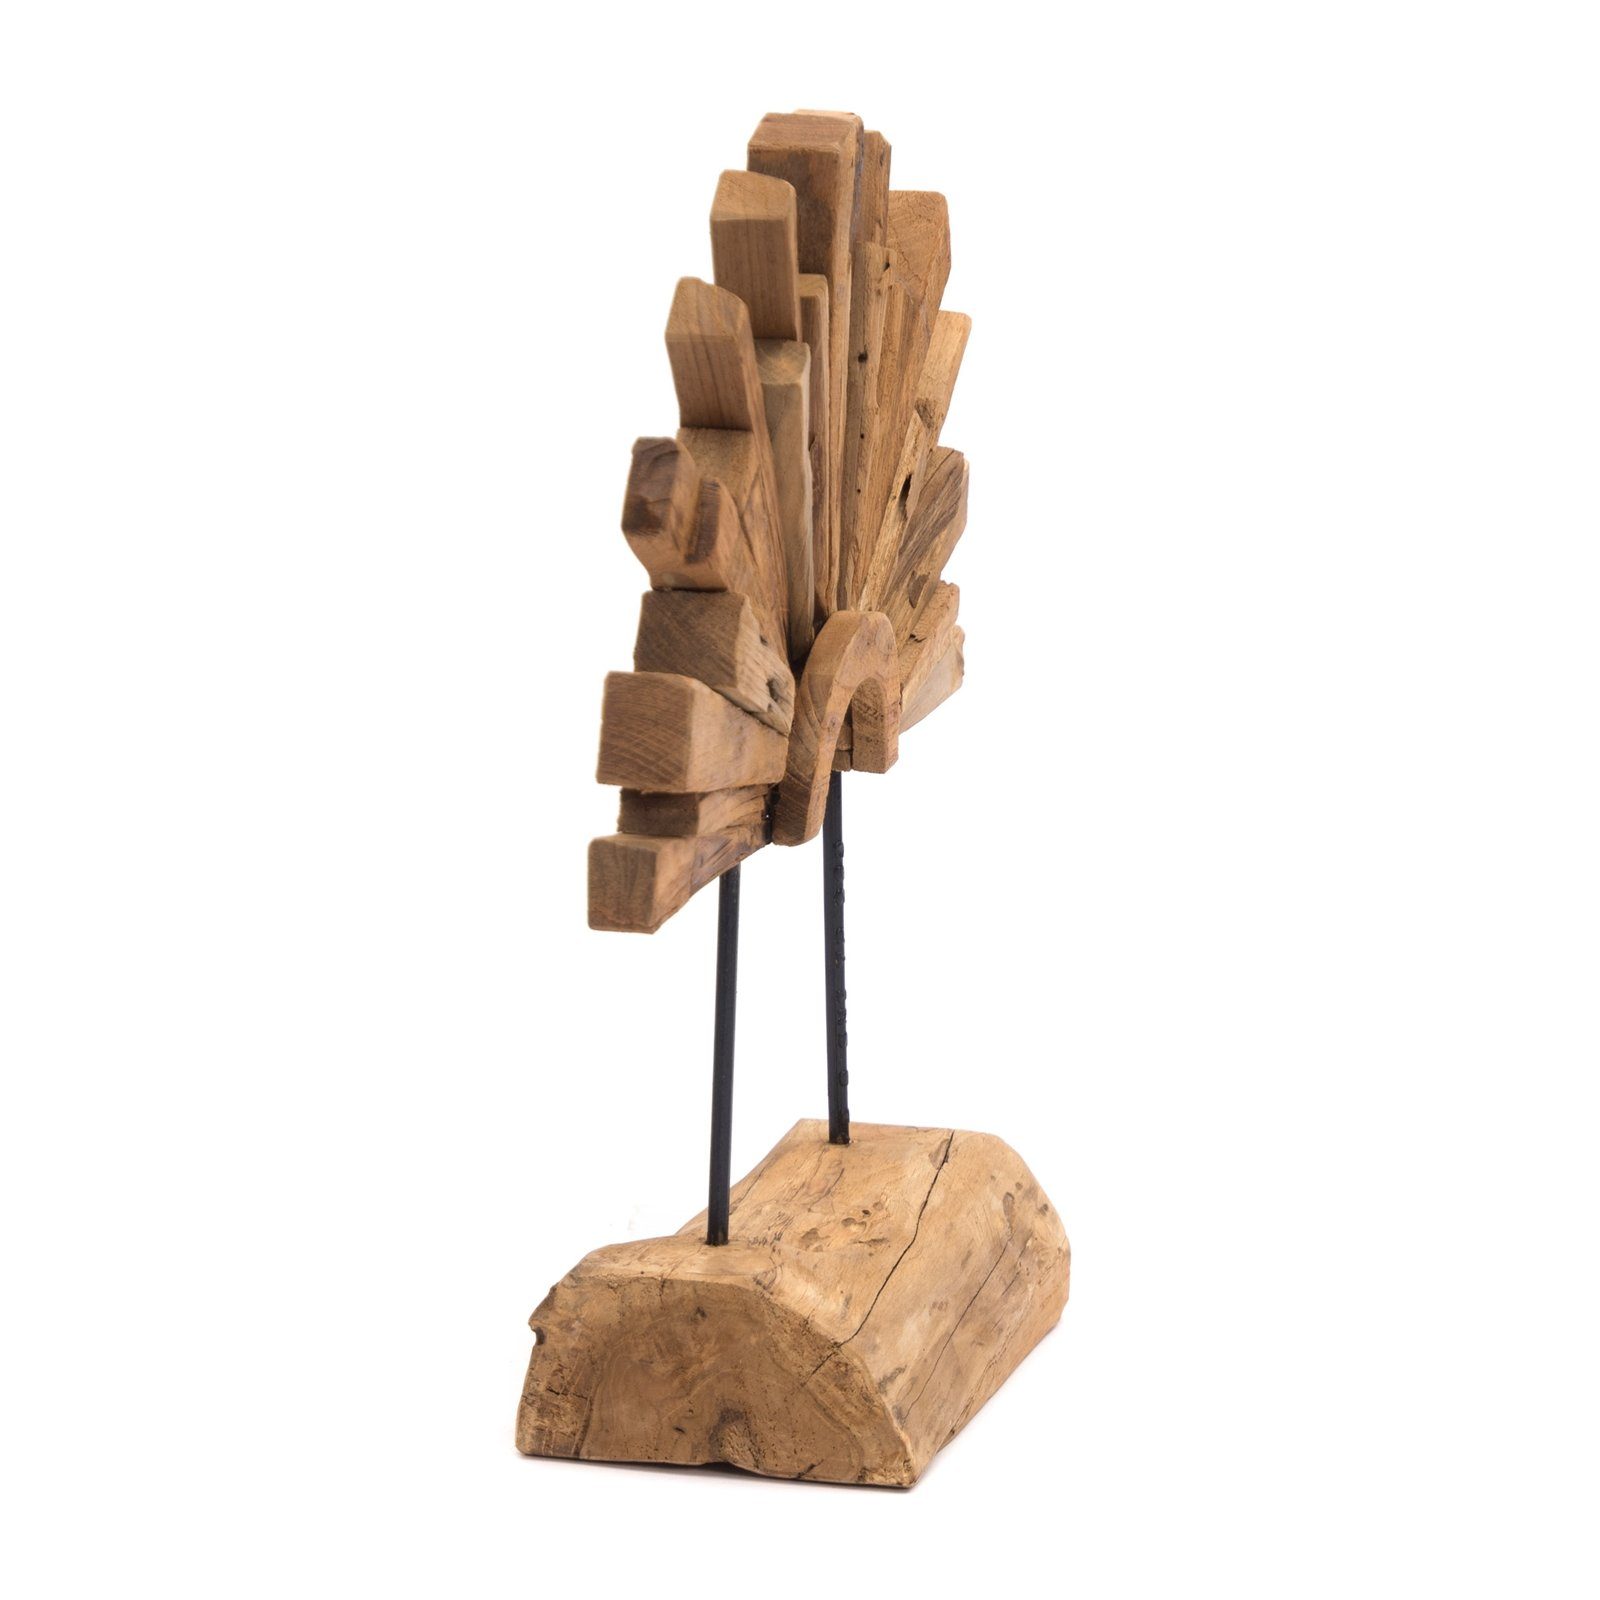 Objekt, CREEDWOOD Standfigur "HALF SUN", cm, SKULPTUR Deko 50 Skulptur Holz, HOLZ